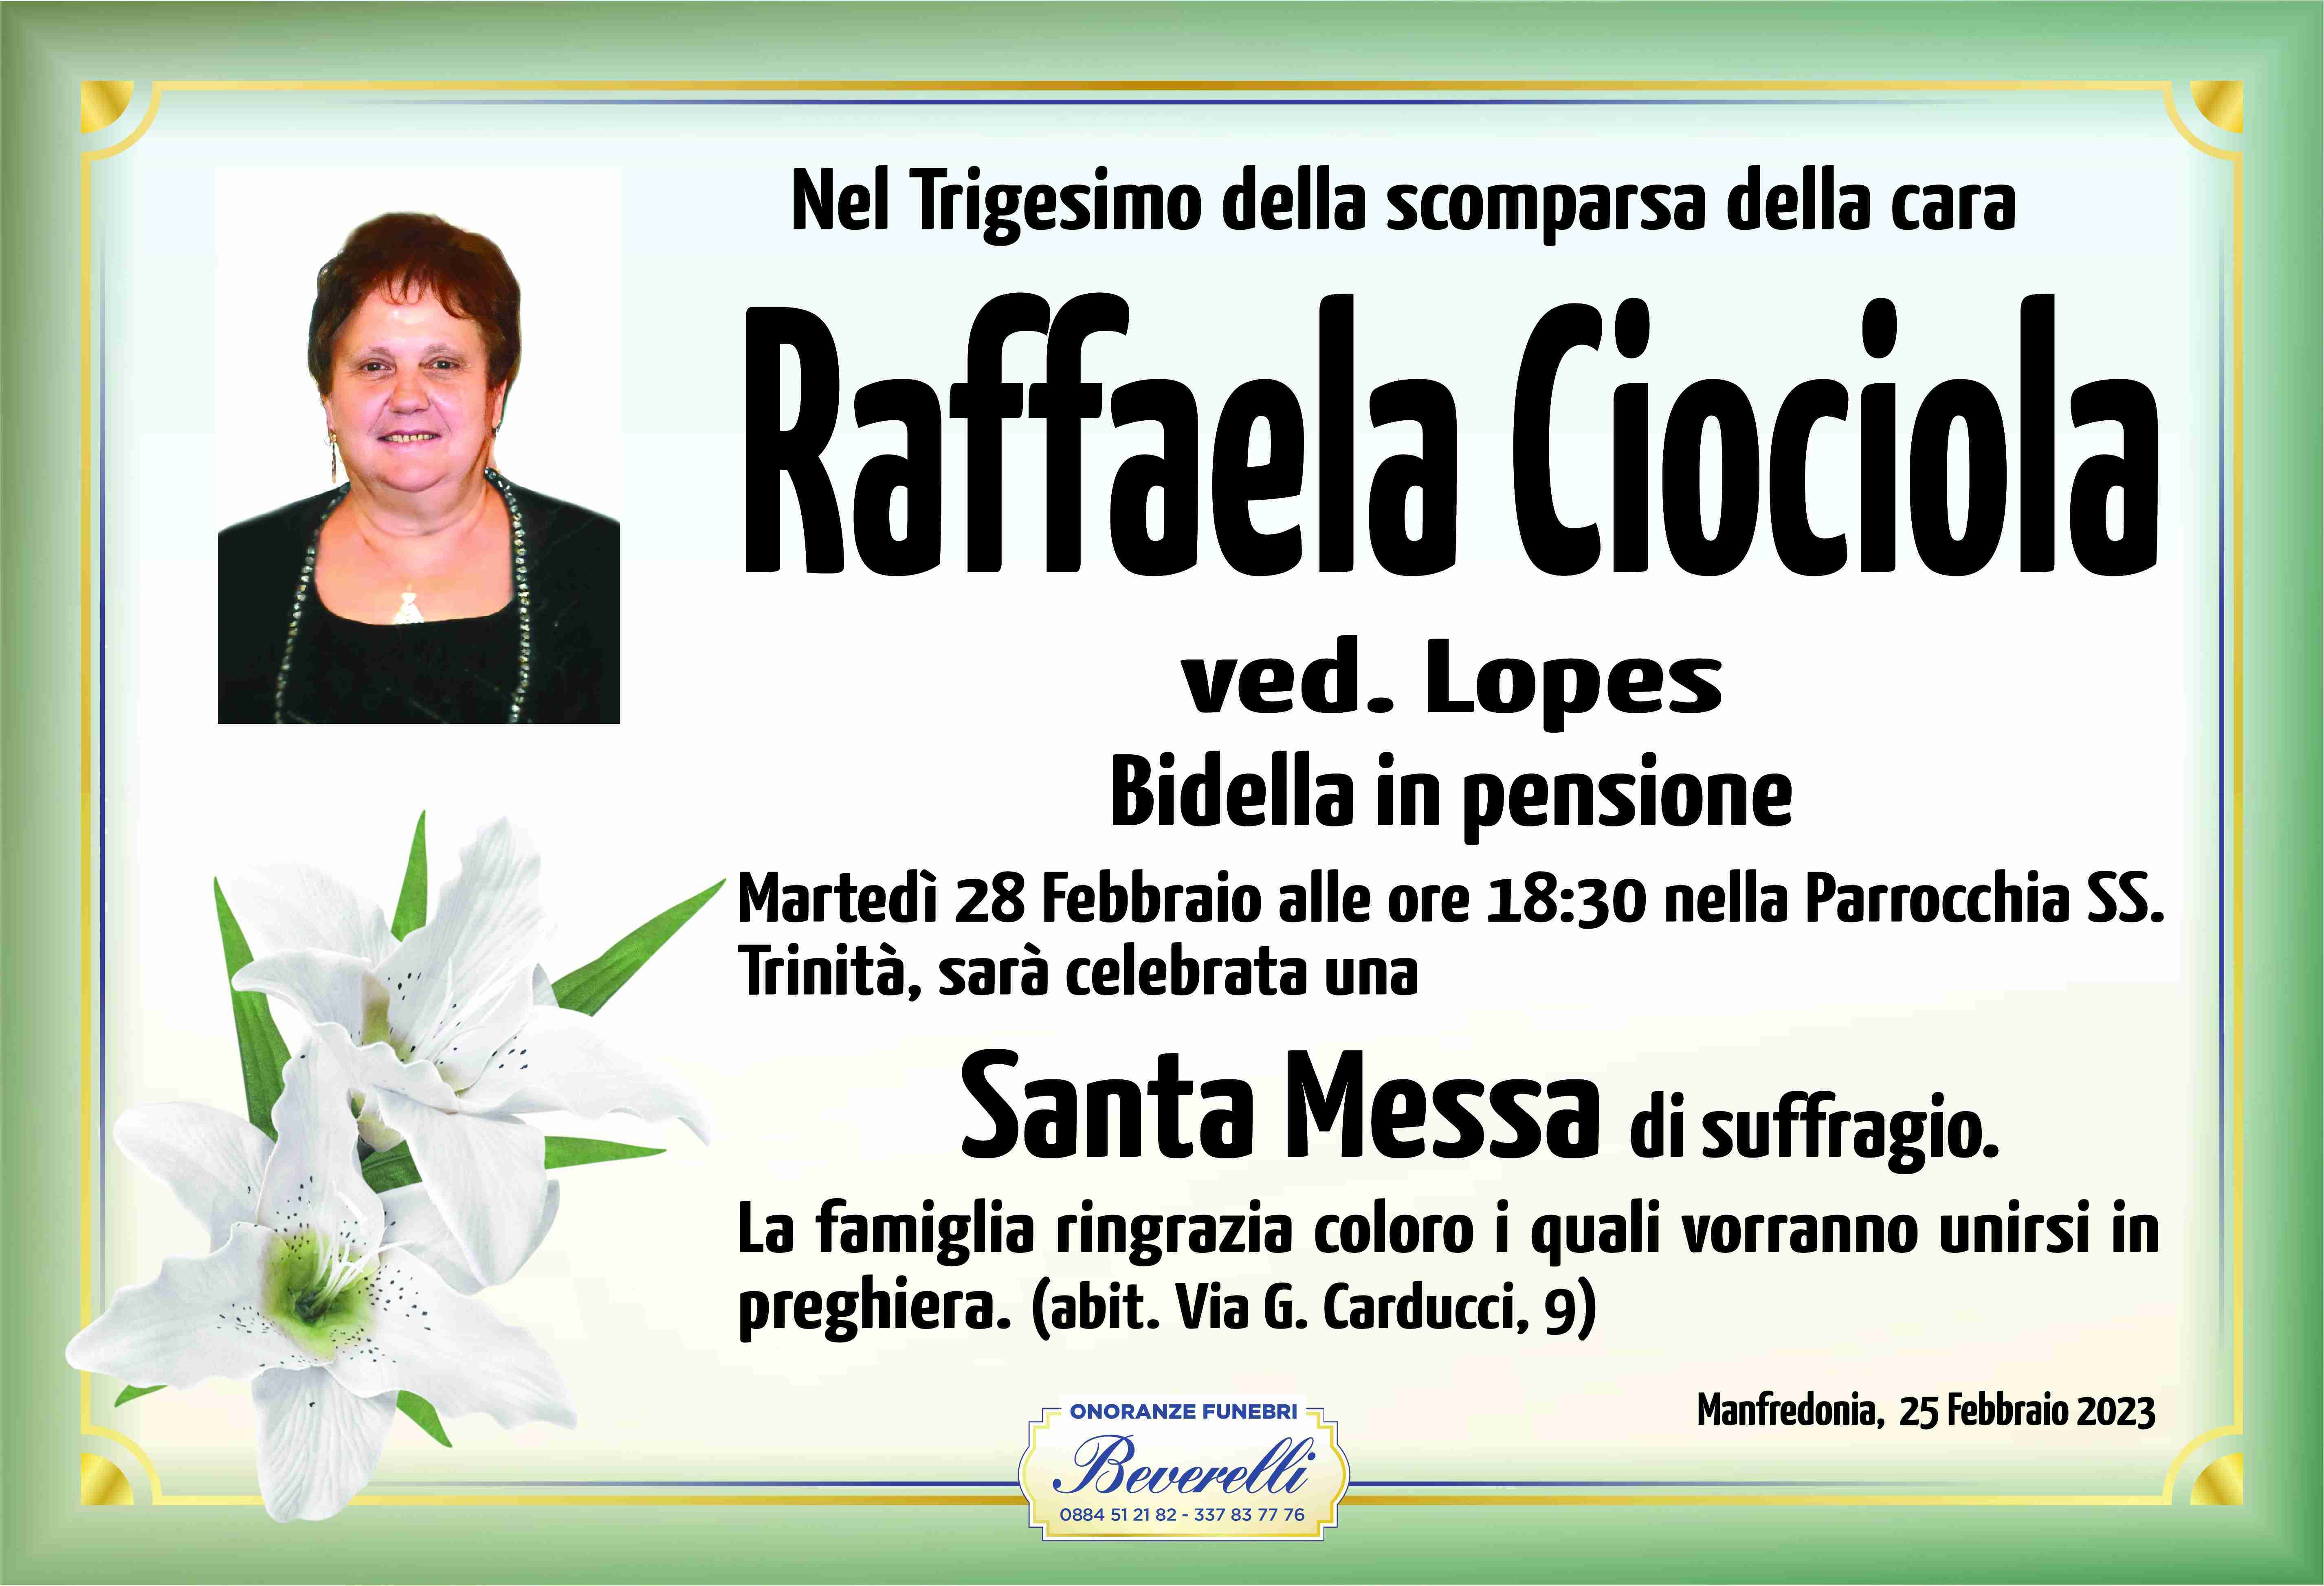 Raffaela Ciociola